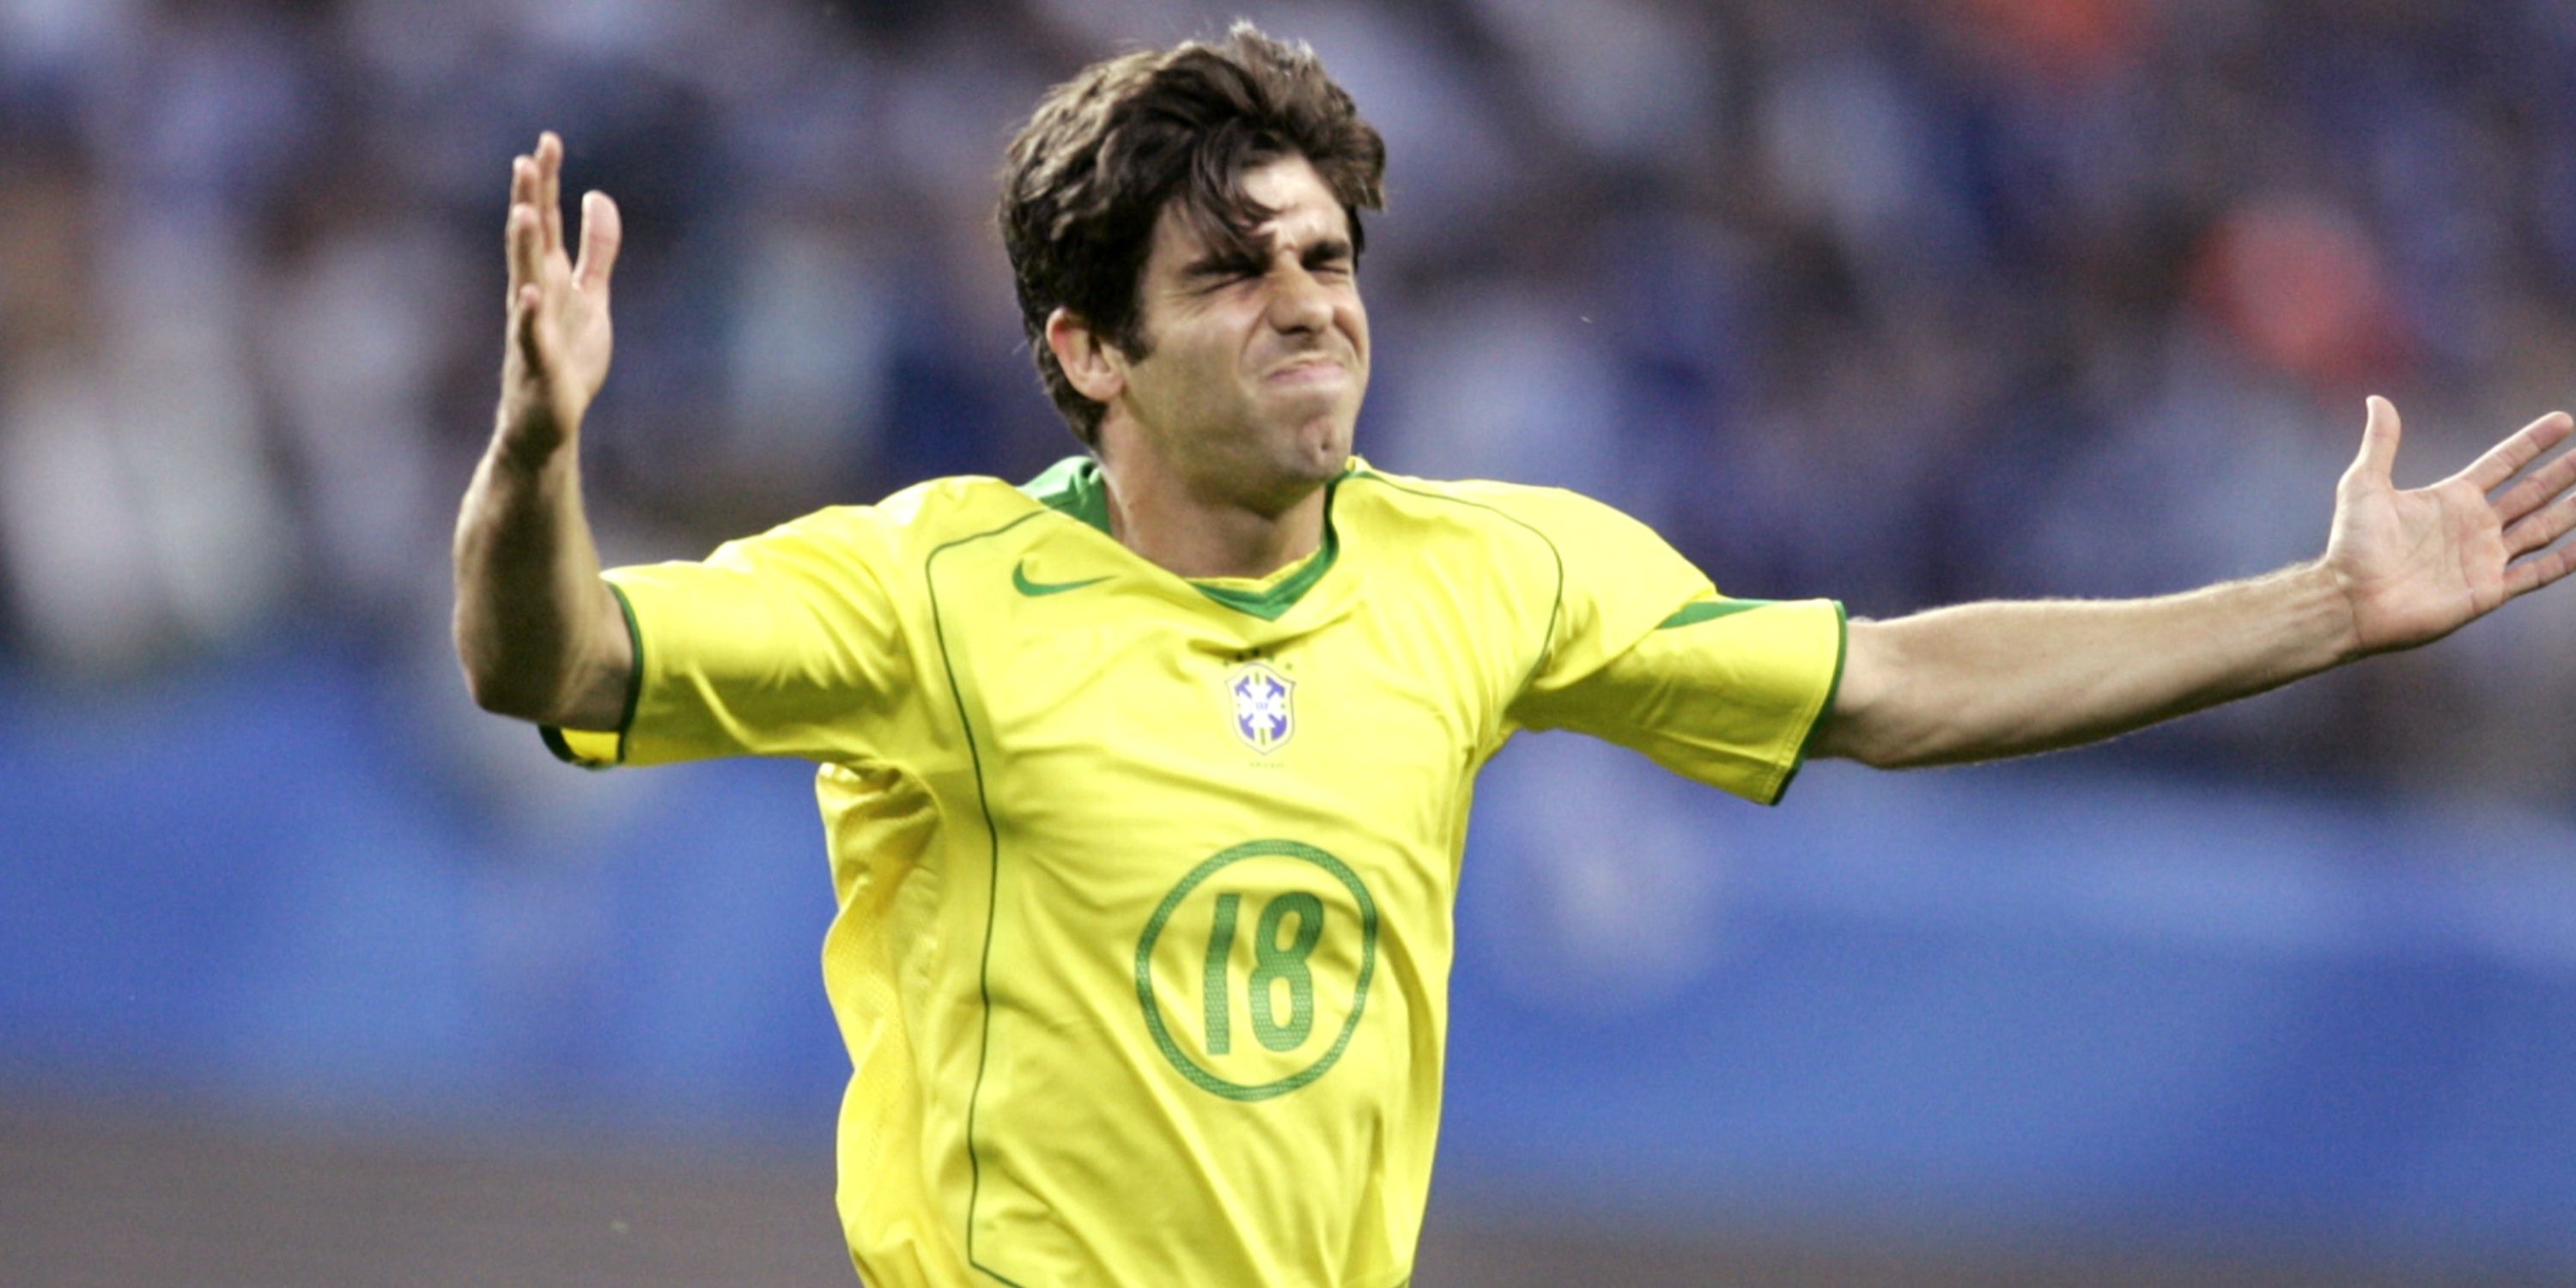 Juninho Pernambucano in action for Brazil